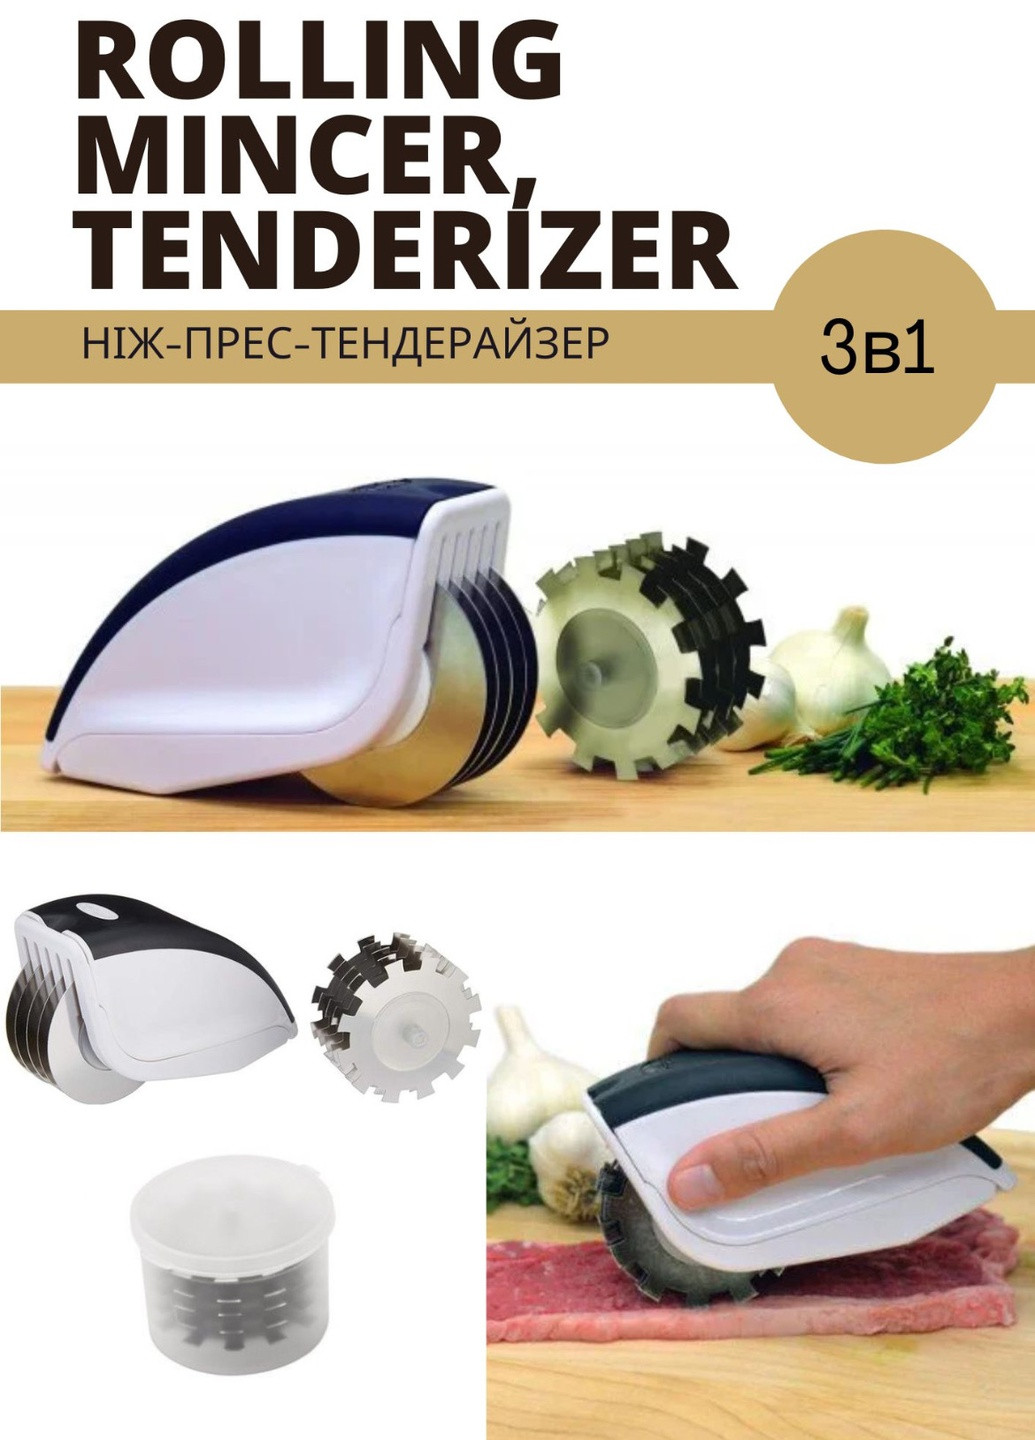 Нож-пресс-тендерайзер для нарезки Rolling Mincer и Tenderizer 3 в 1 с чесночным прессом XO (257658577)